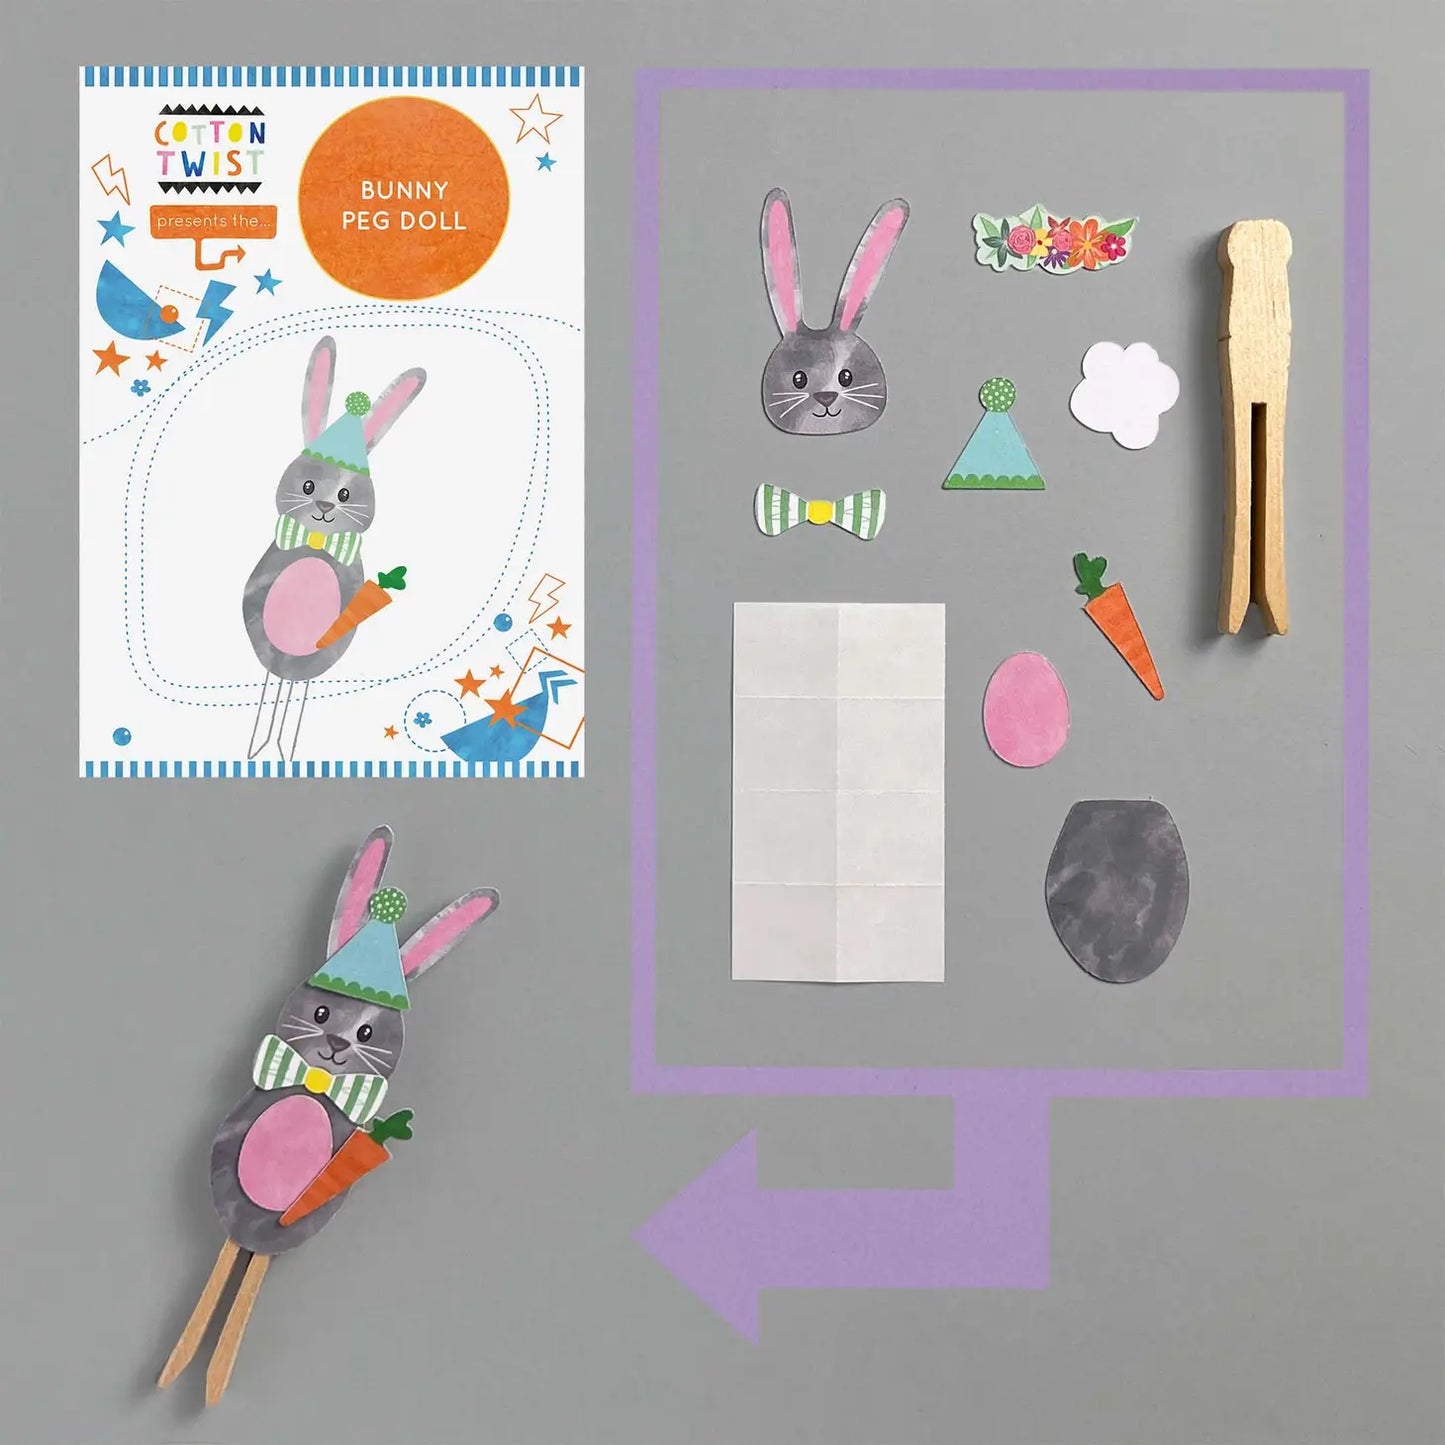 Cotton Twist Make Your Own Bunny Peg Doll Kit